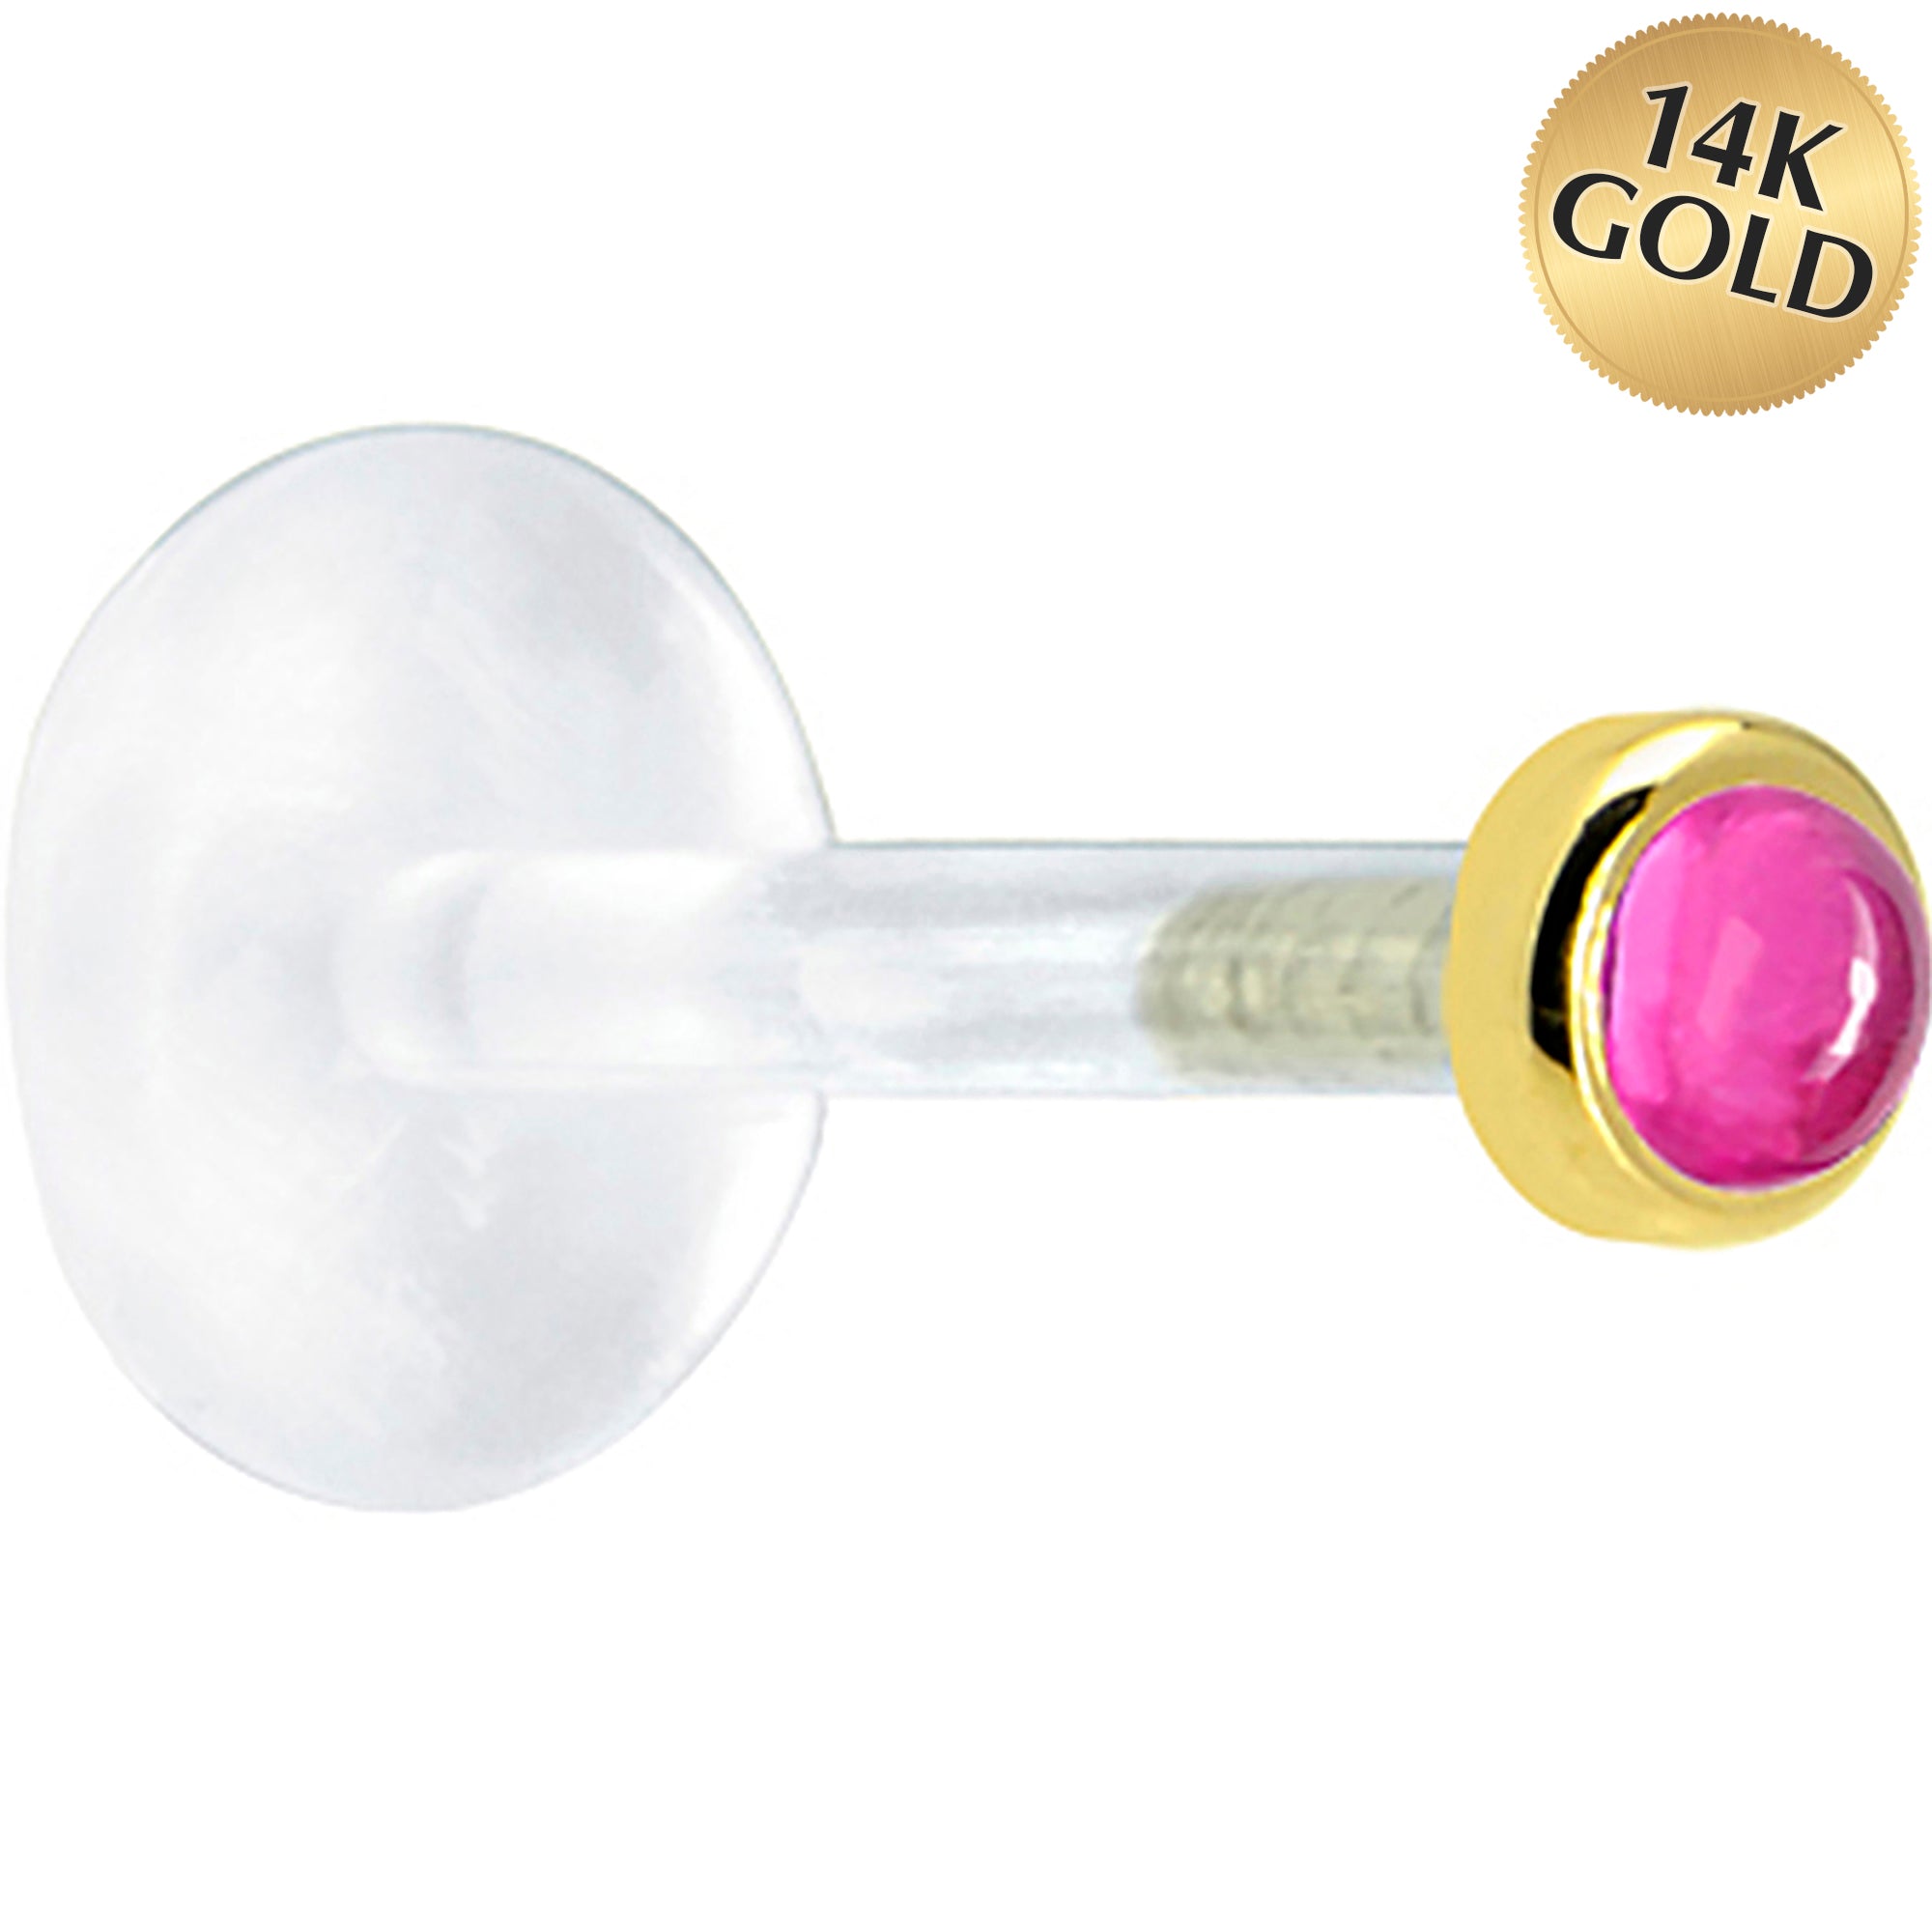 16 Gauge 5/16 Solid 14KT Yellow Gold 2mm Genuine Pink Tourmaline Bioplast Tragus Earring Stud